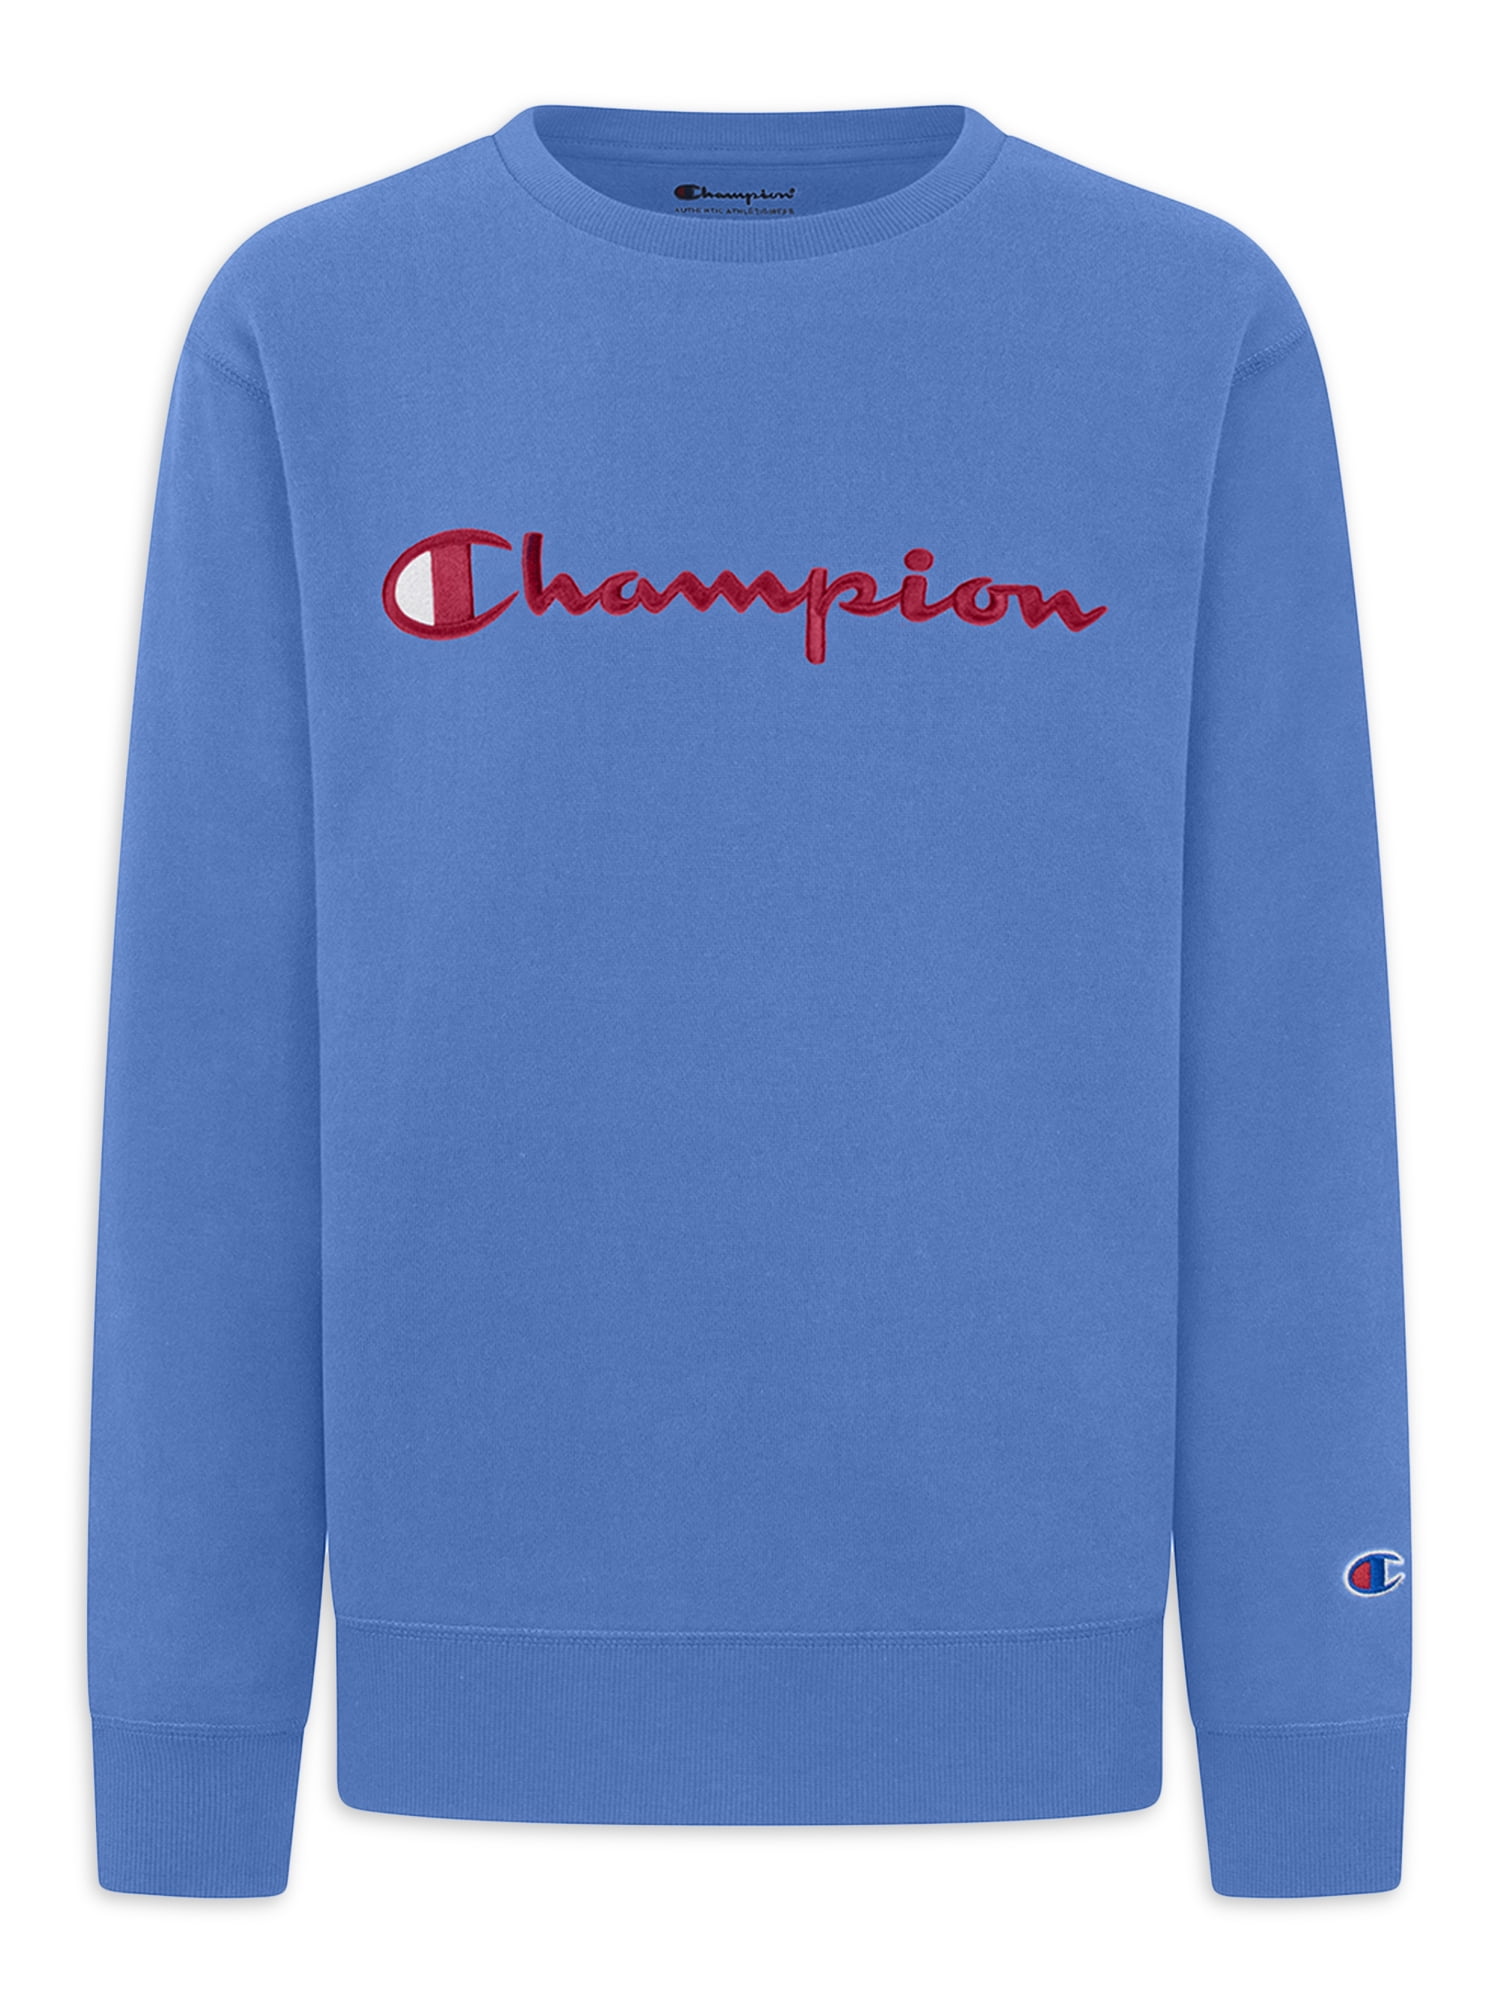 Crewneck Champion 8-20 Sweatshirt, Signature Boys Sizes Fleece